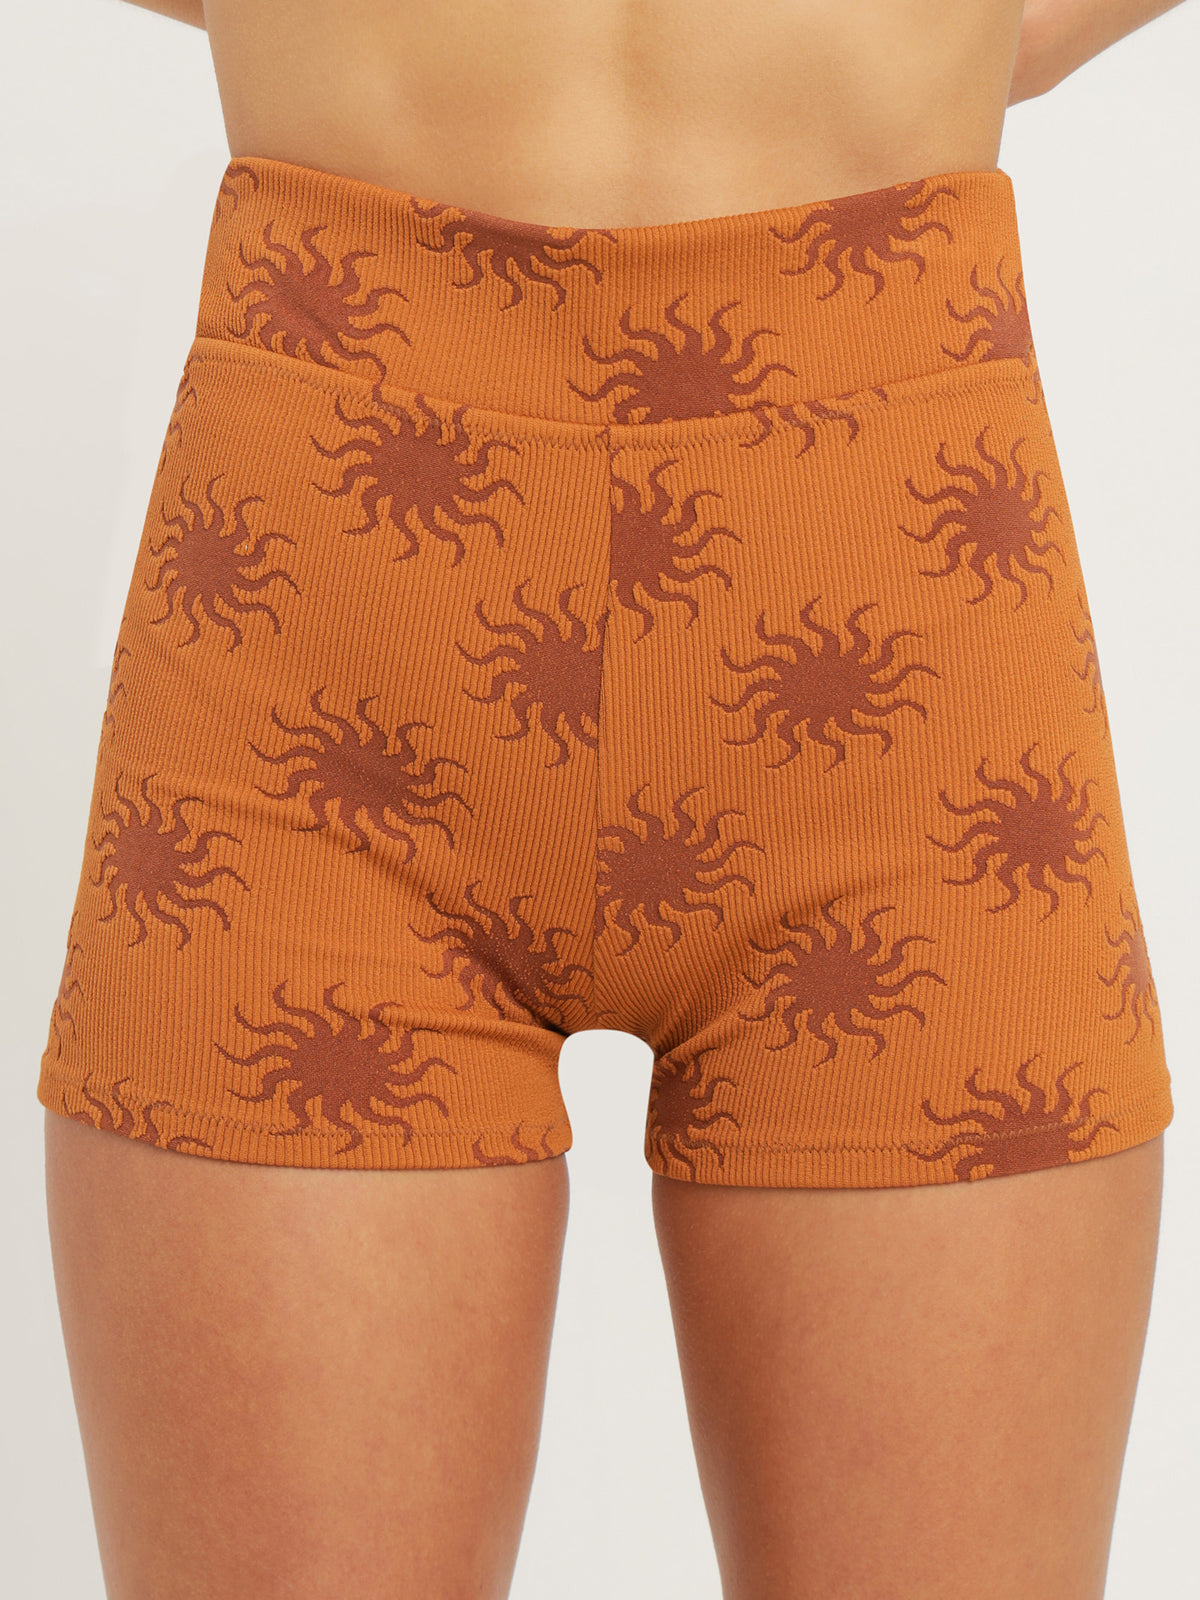 Solstice Bike Shorts in Clay Orange